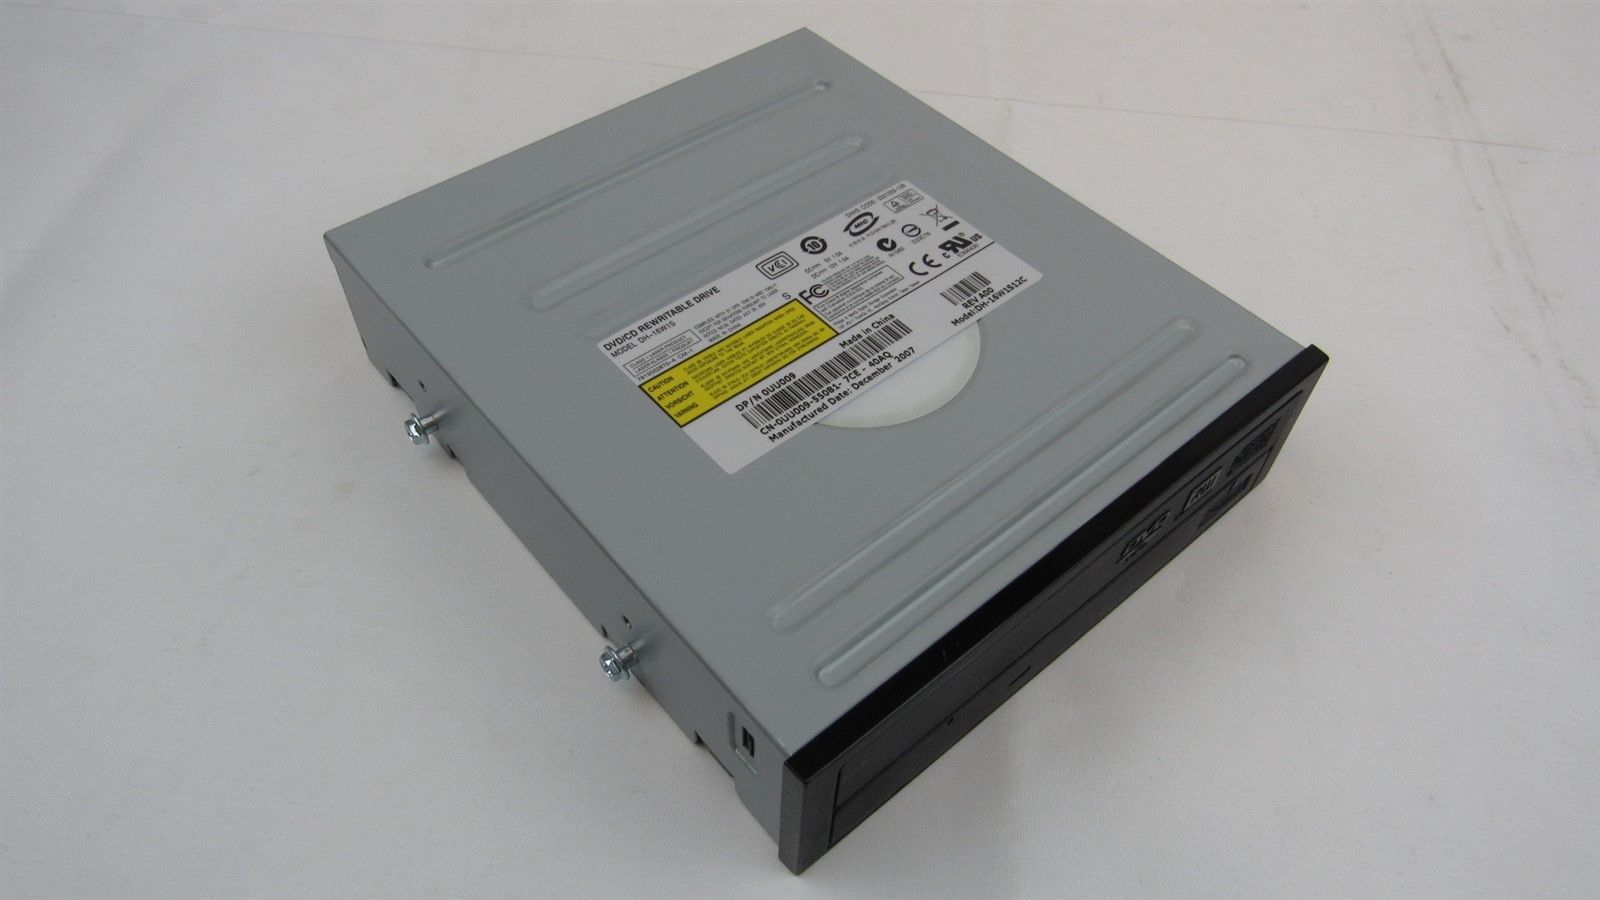 Dell Desktop 16X SATA DVD+RW/CDRW Dual Layer Burner Drive UU009 0UU009